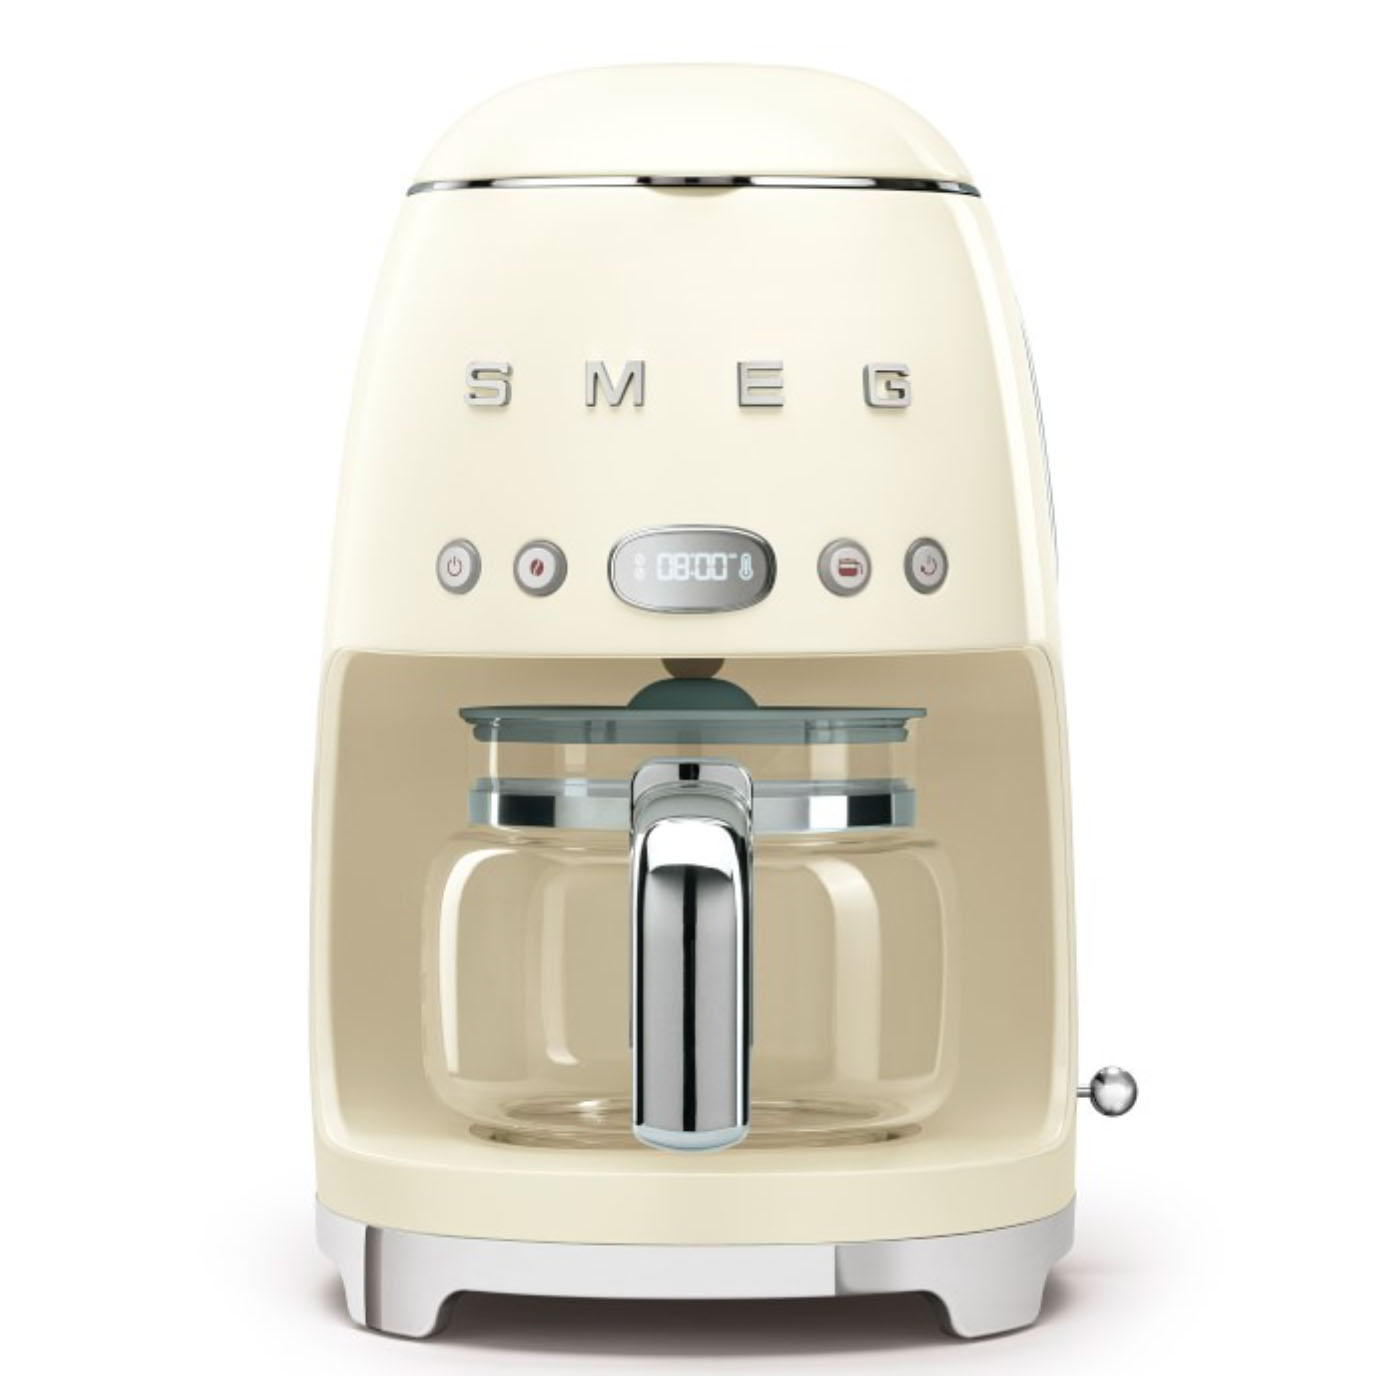 Cream-colored SMEG 10-Cup Drip Coffee Maker